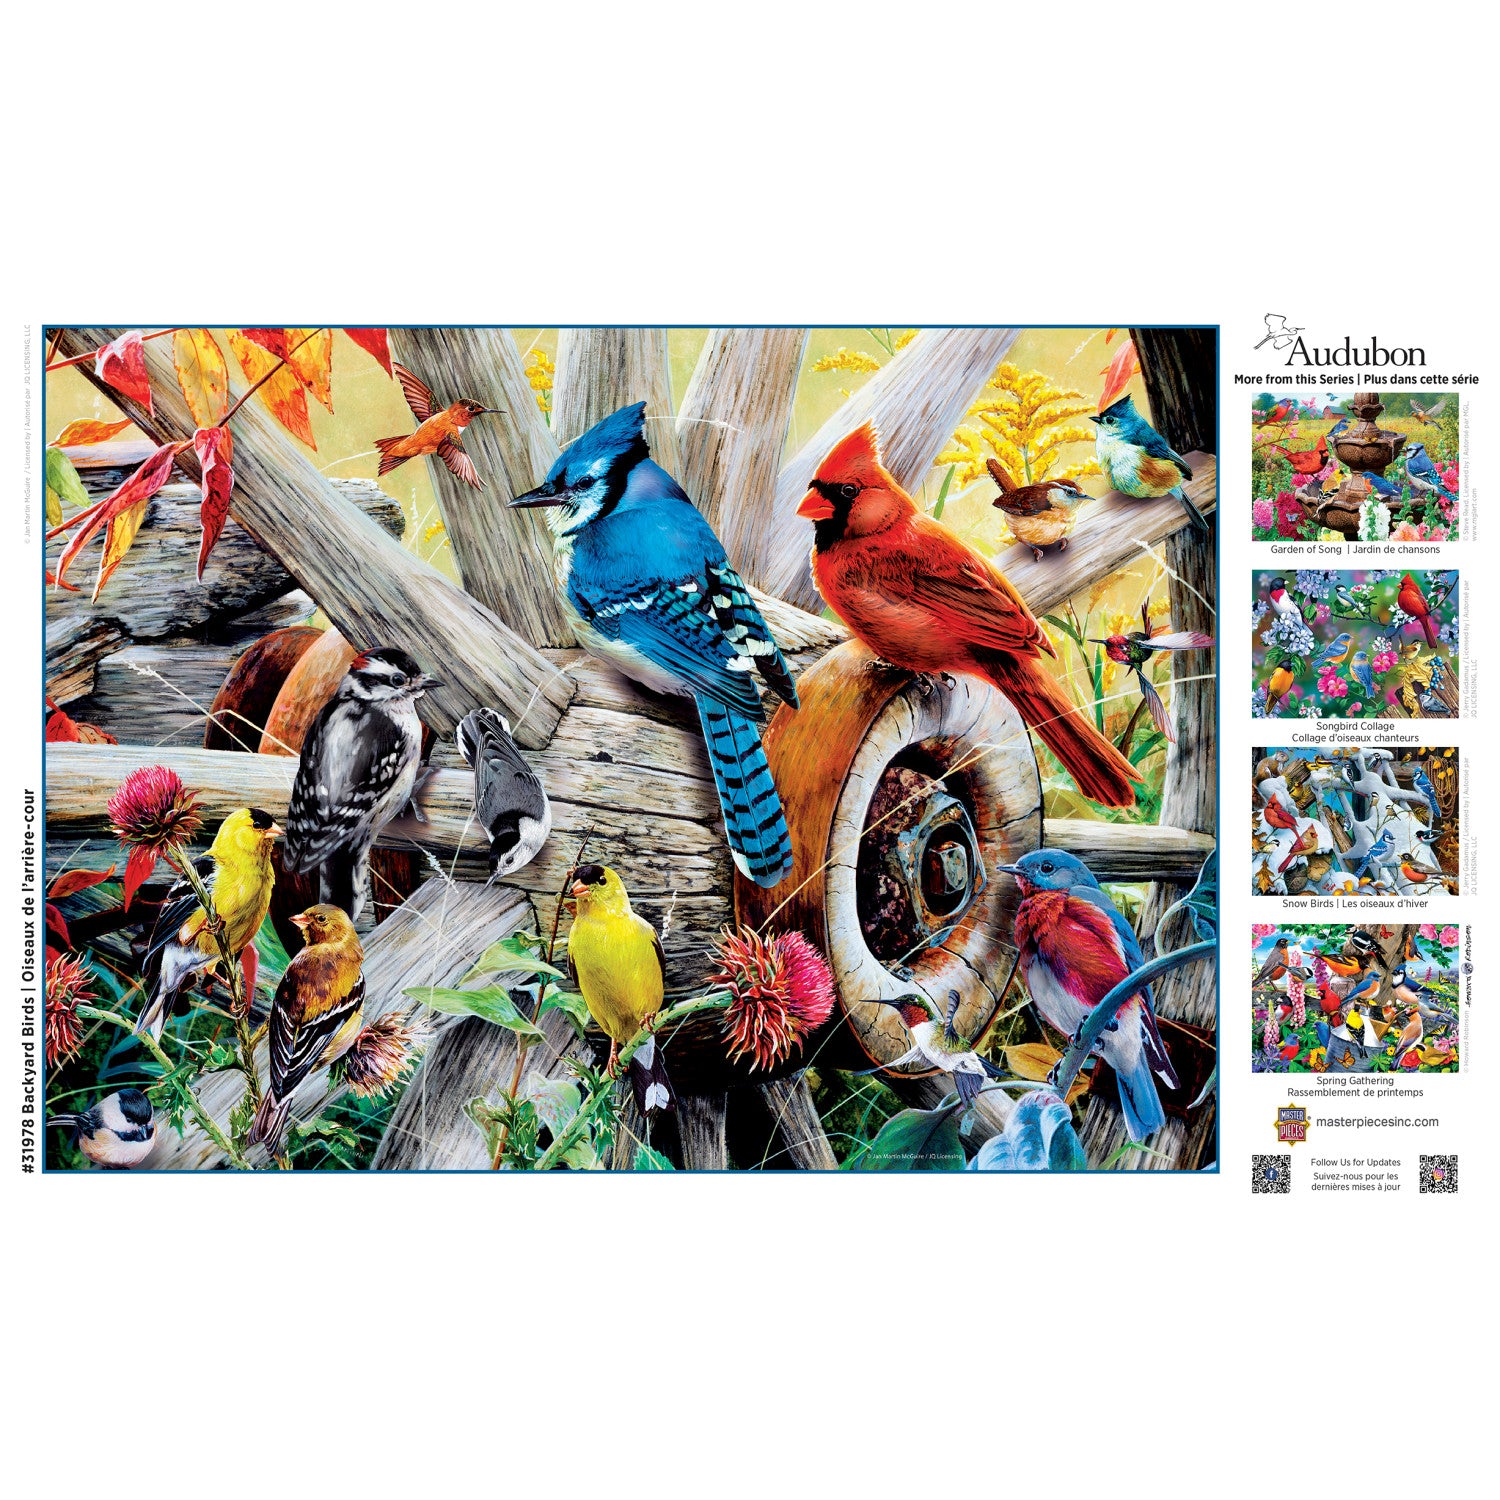 Audubon - Backyard Birds 1000 Piece Jigsaw Puzzle